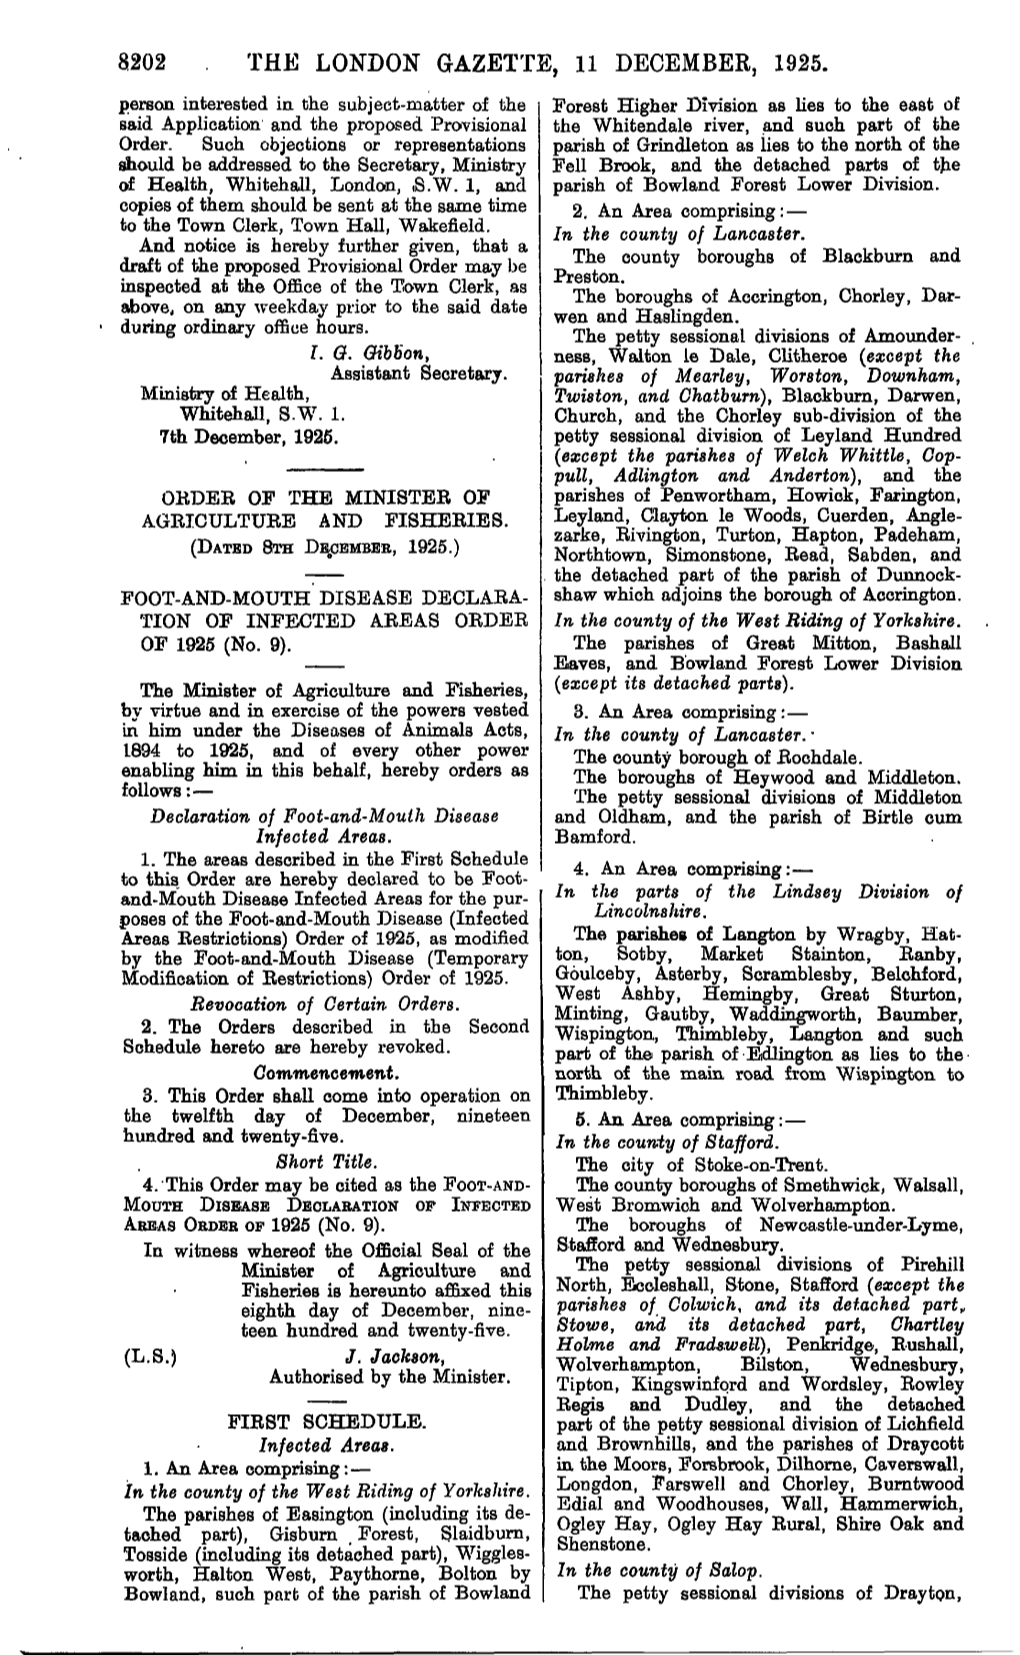 8202 the London Gazette, 11 December, 1925